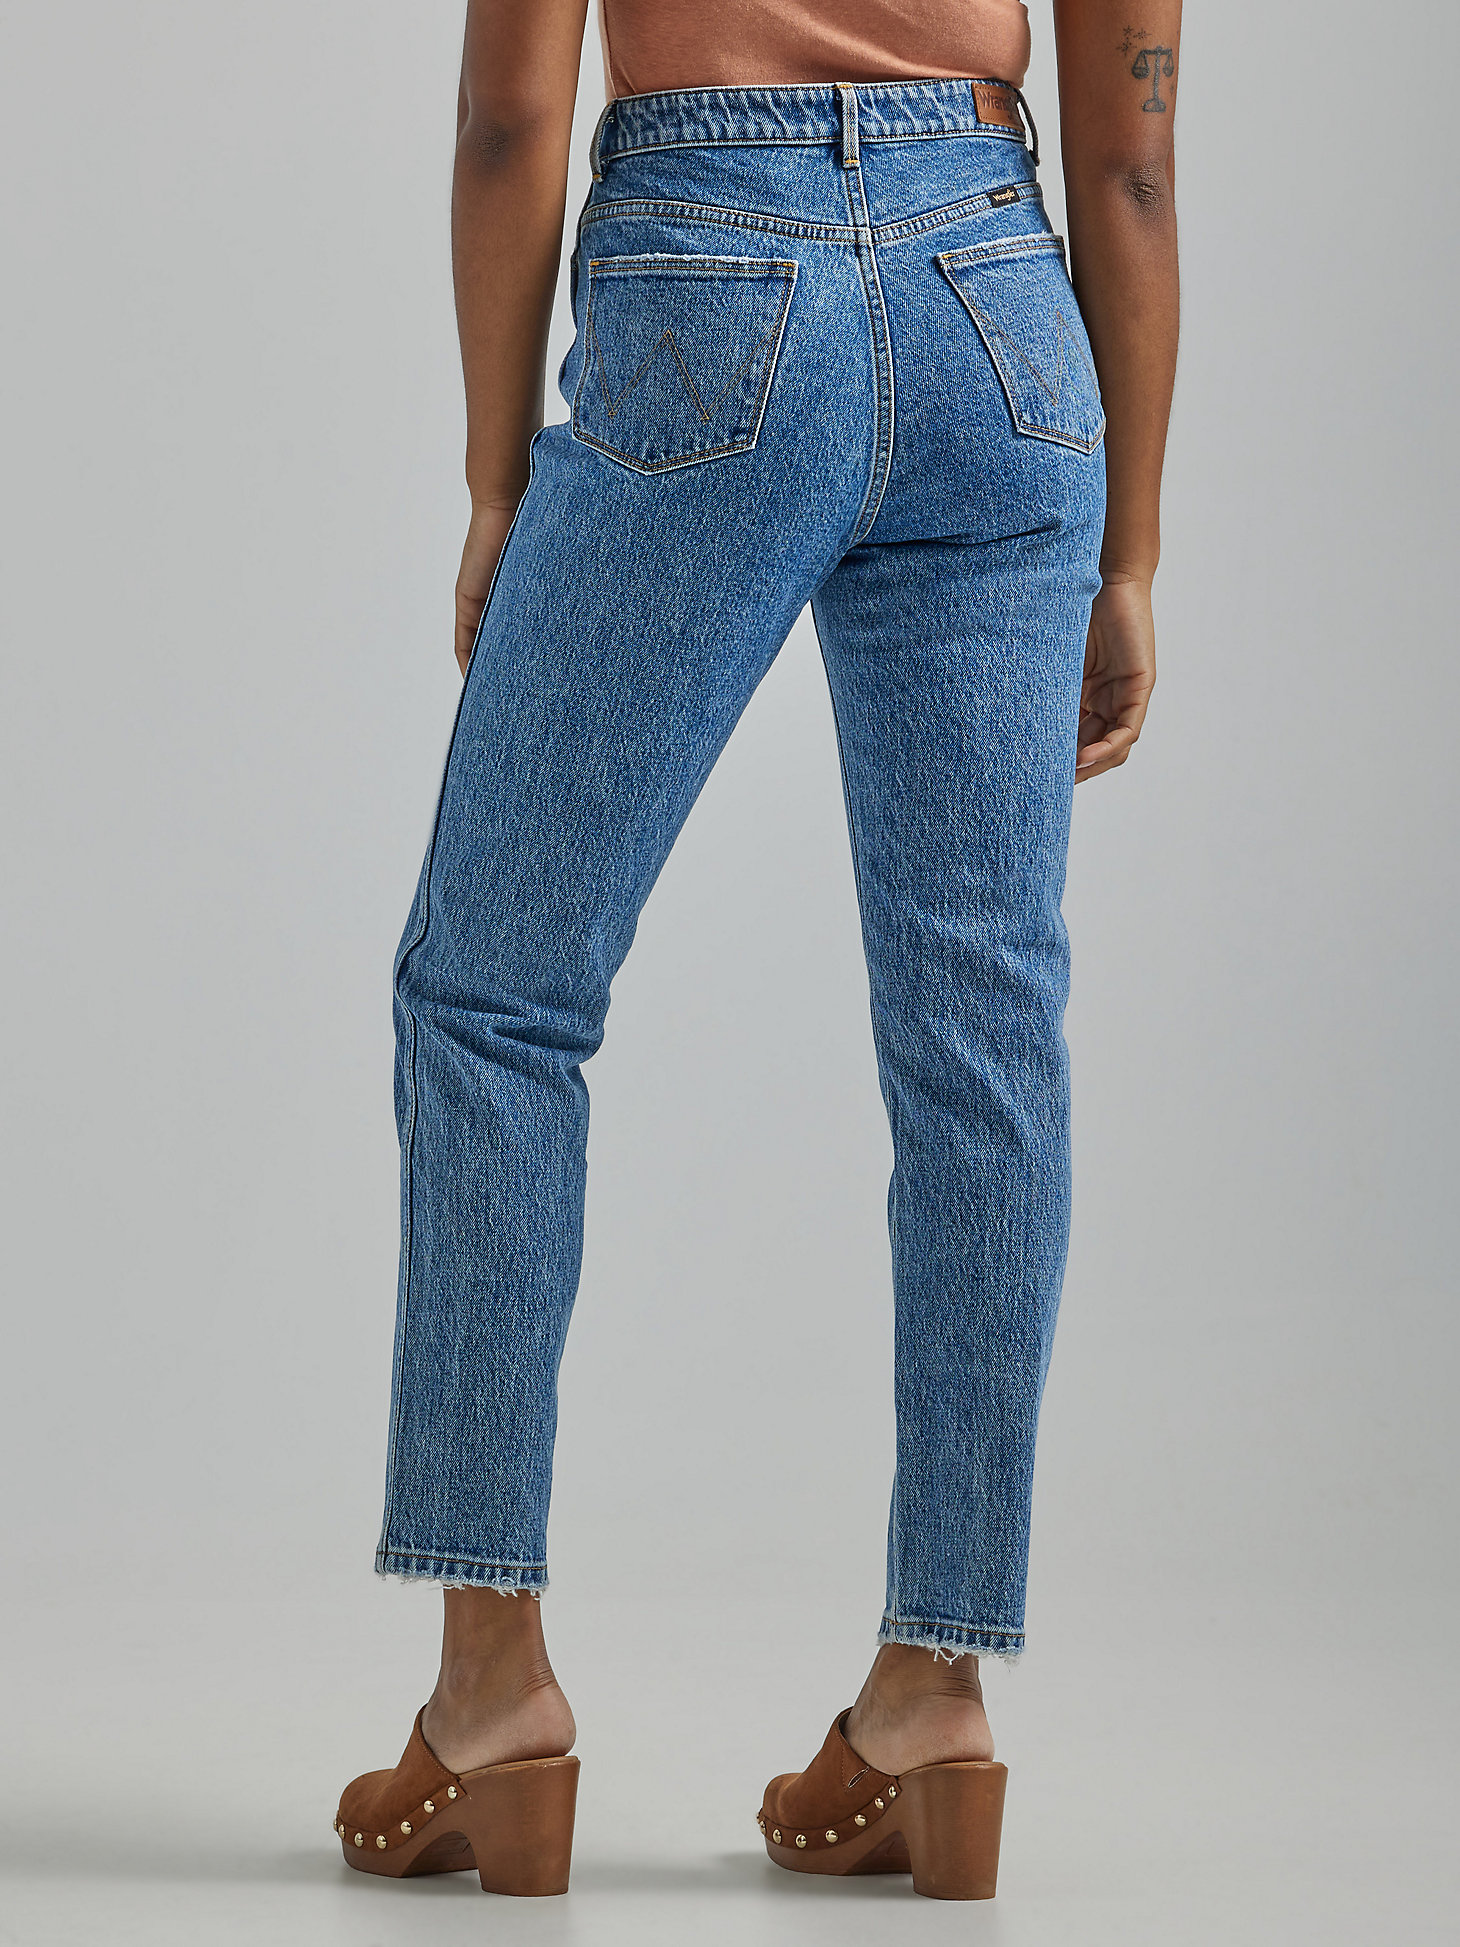 Women's Distressed Vintage Taper Jean